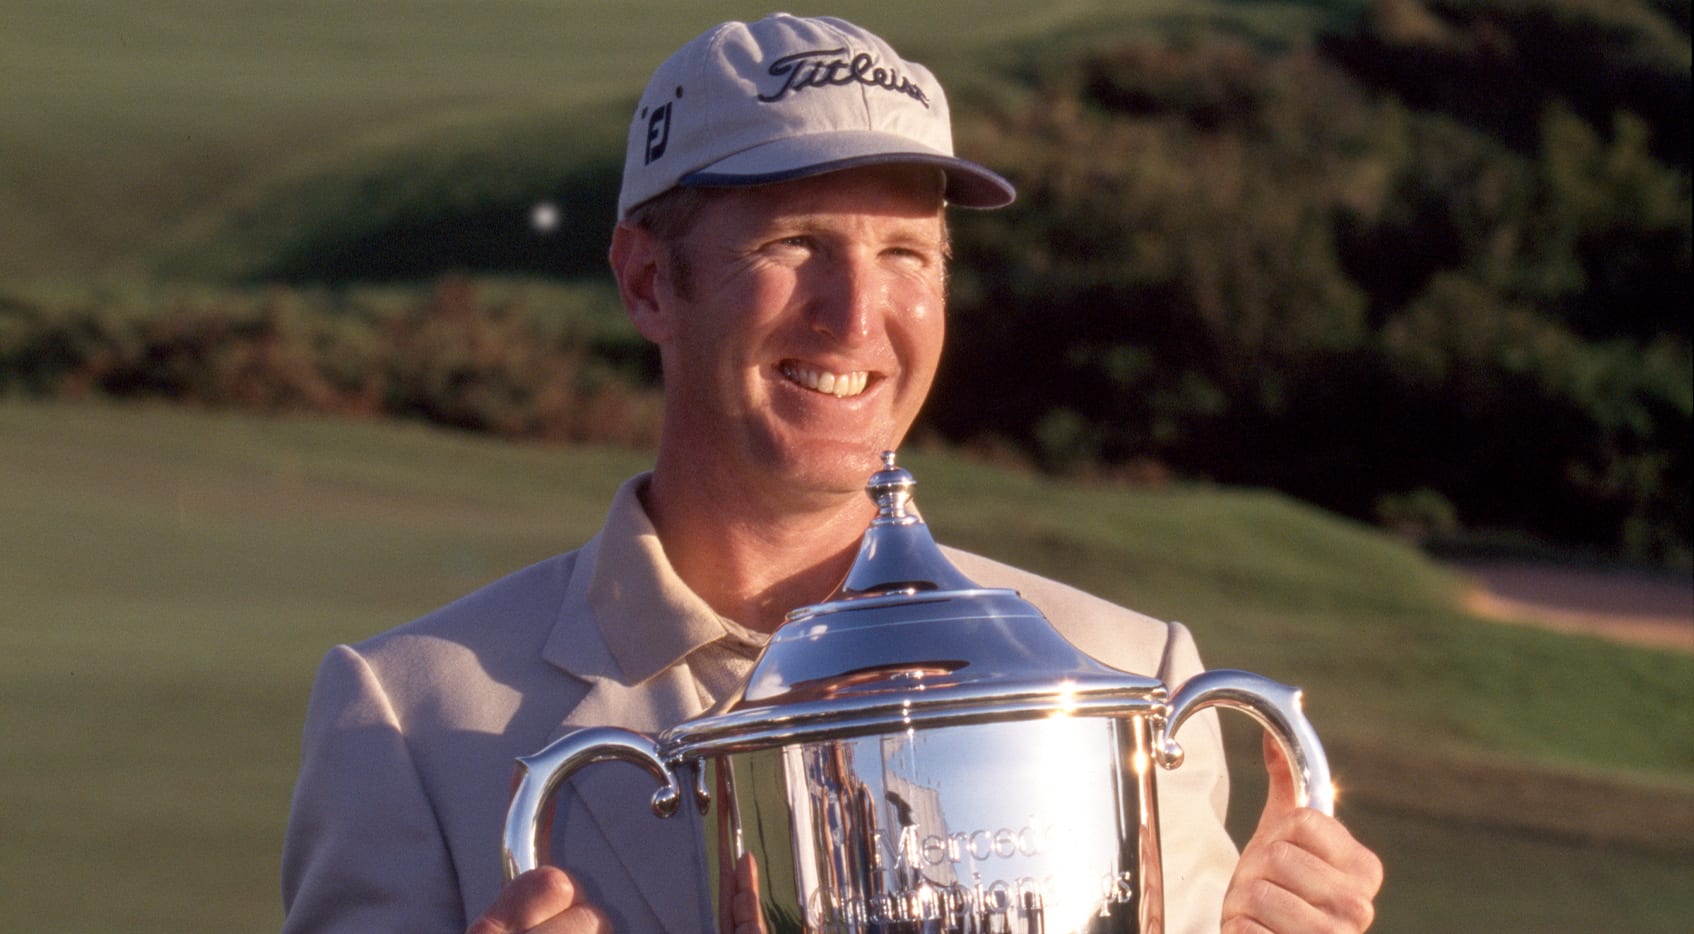 David Duval won by nine shots at the 1999 Mercedes Championships. (Stan Badz/PGA TOUR)